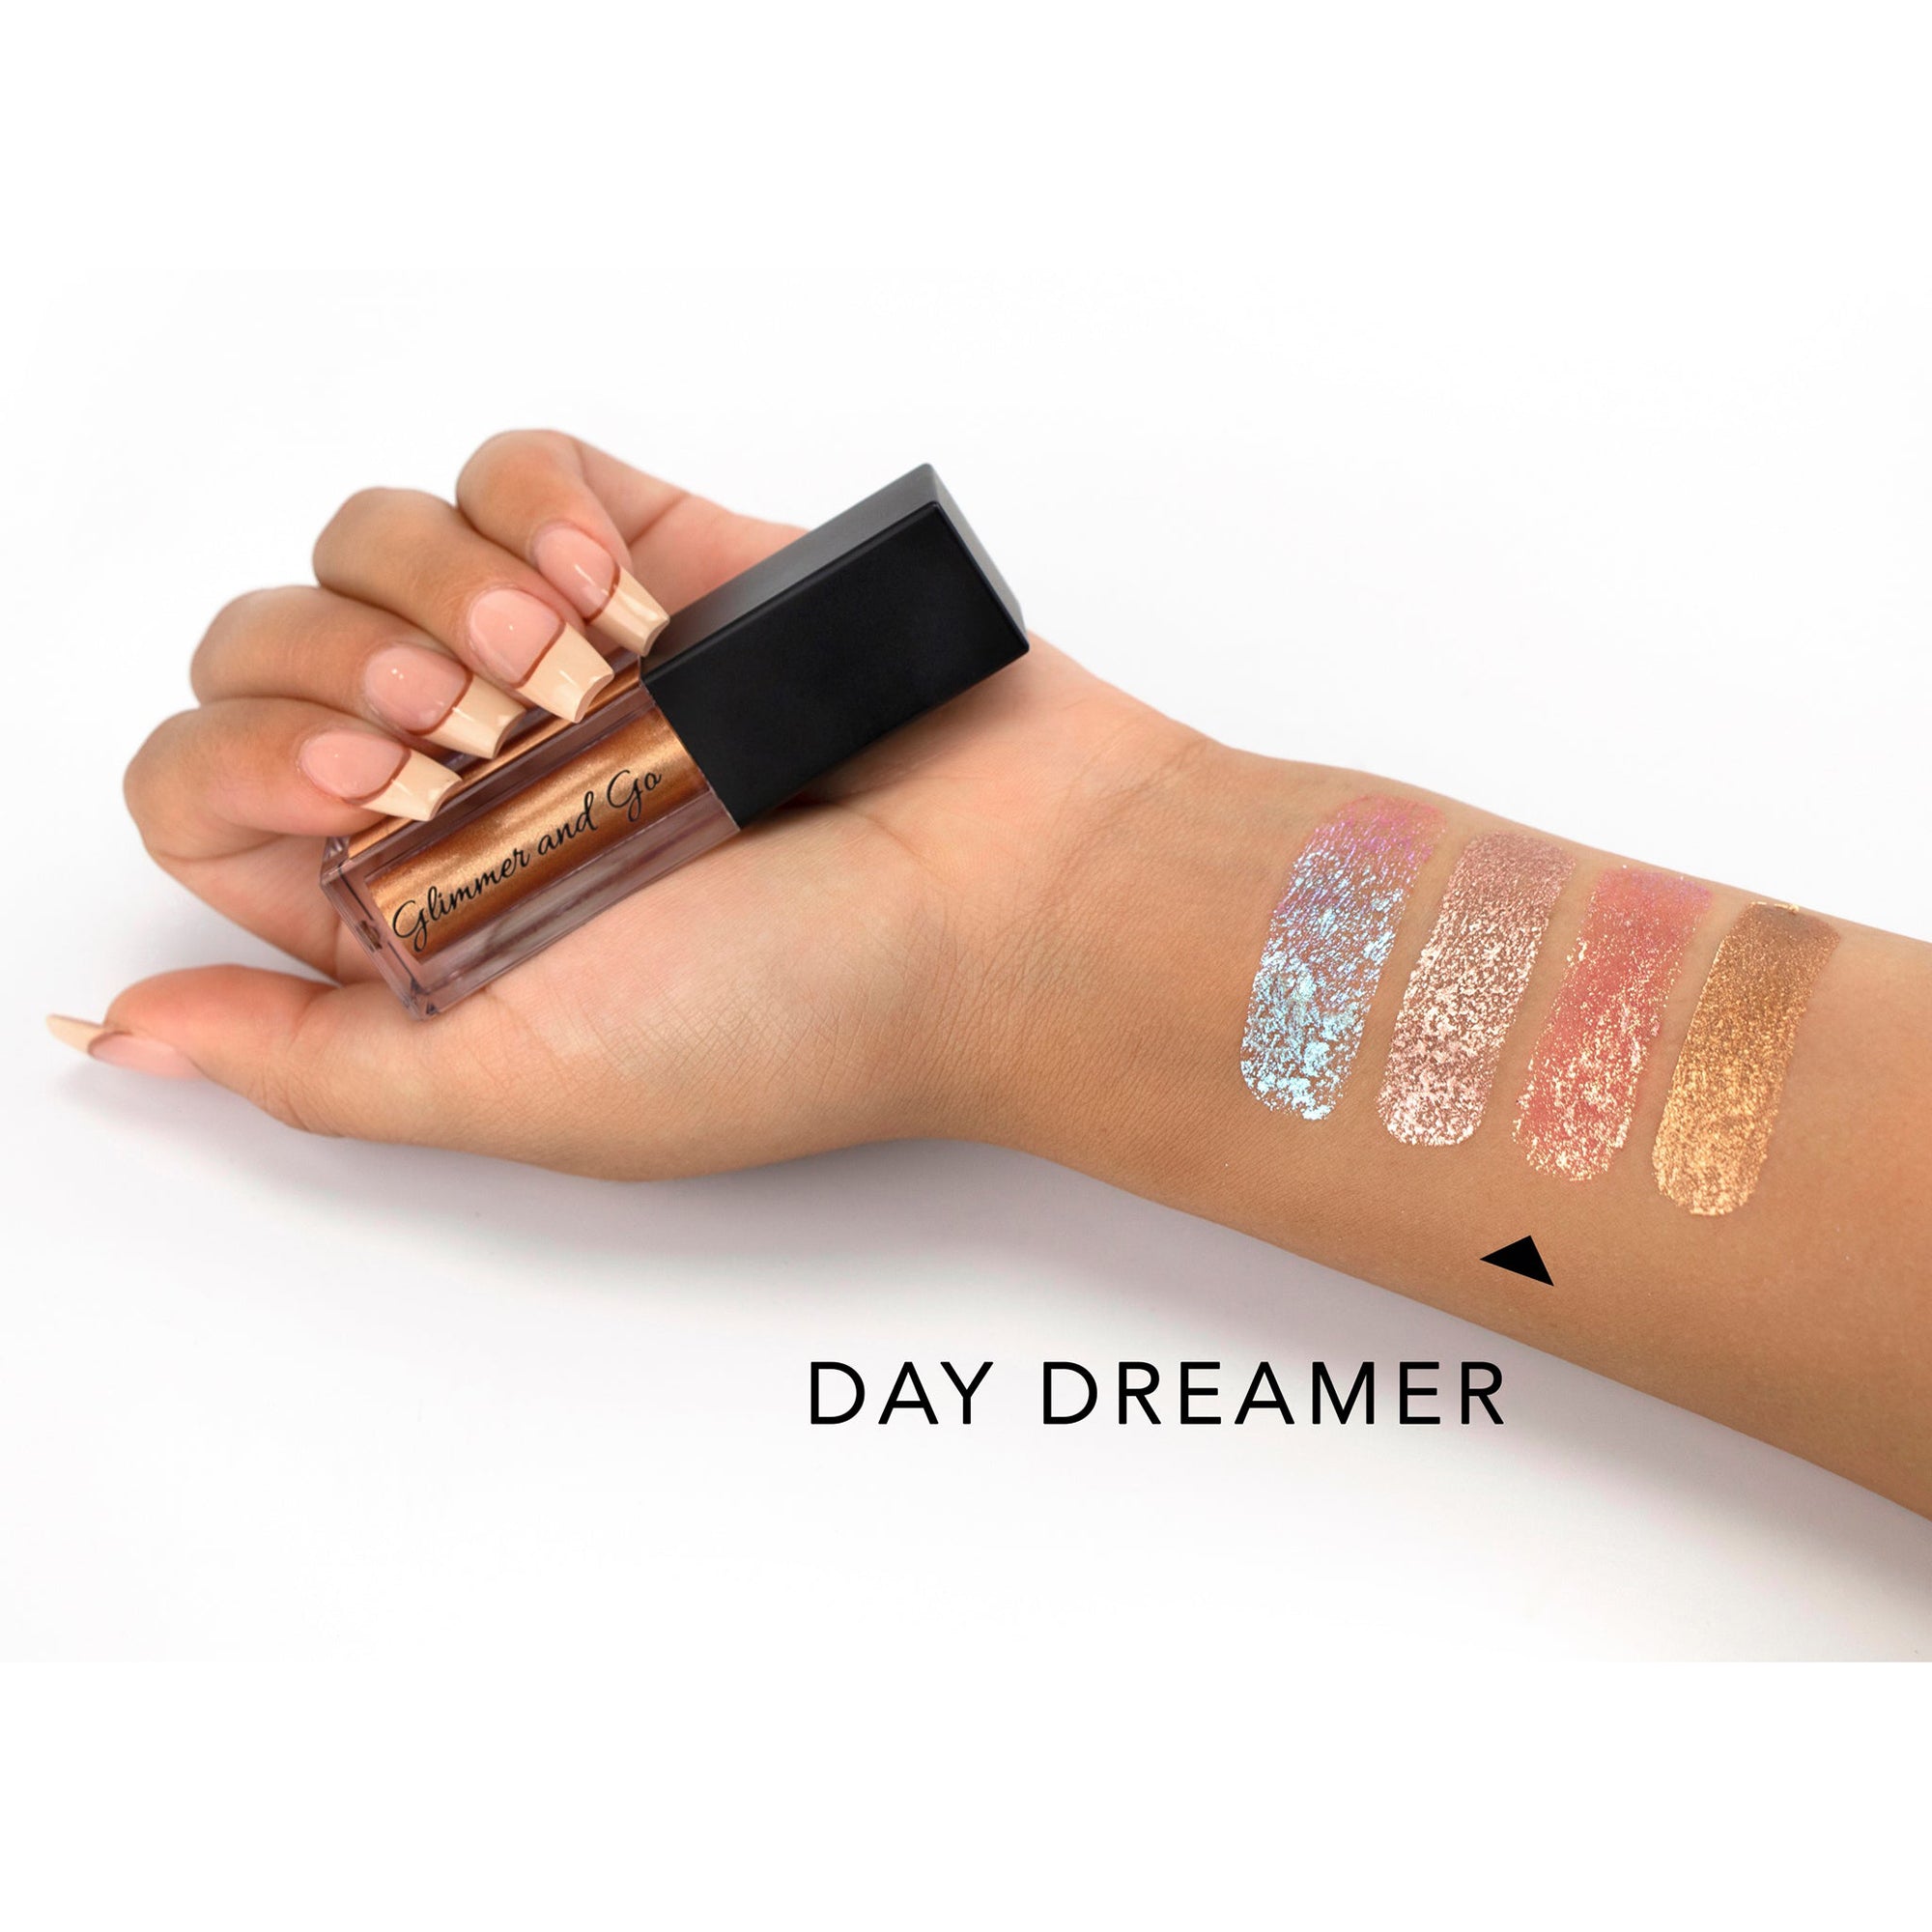 Frankie Rose Glimmer and Go Liquid Glitter Eyeshadow / DAY DREAMER